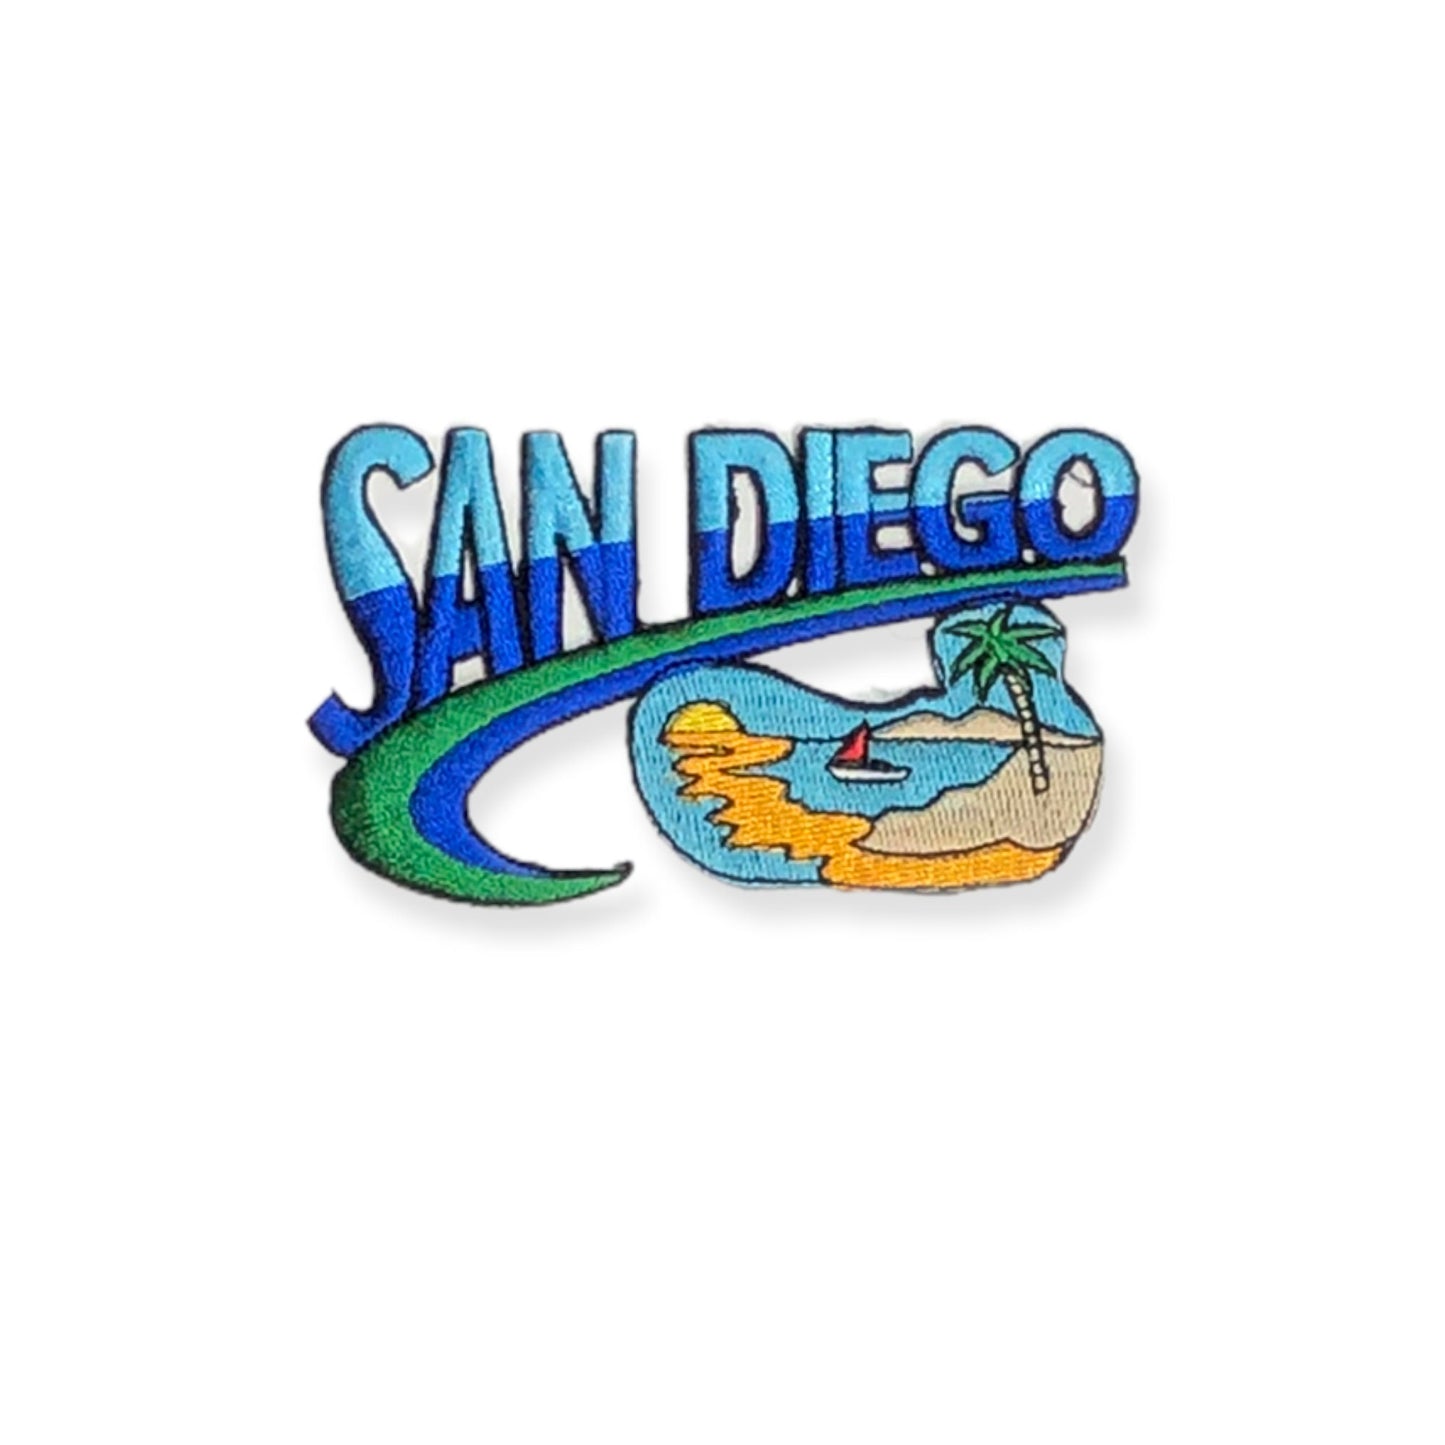 Vintage San Diego Patch